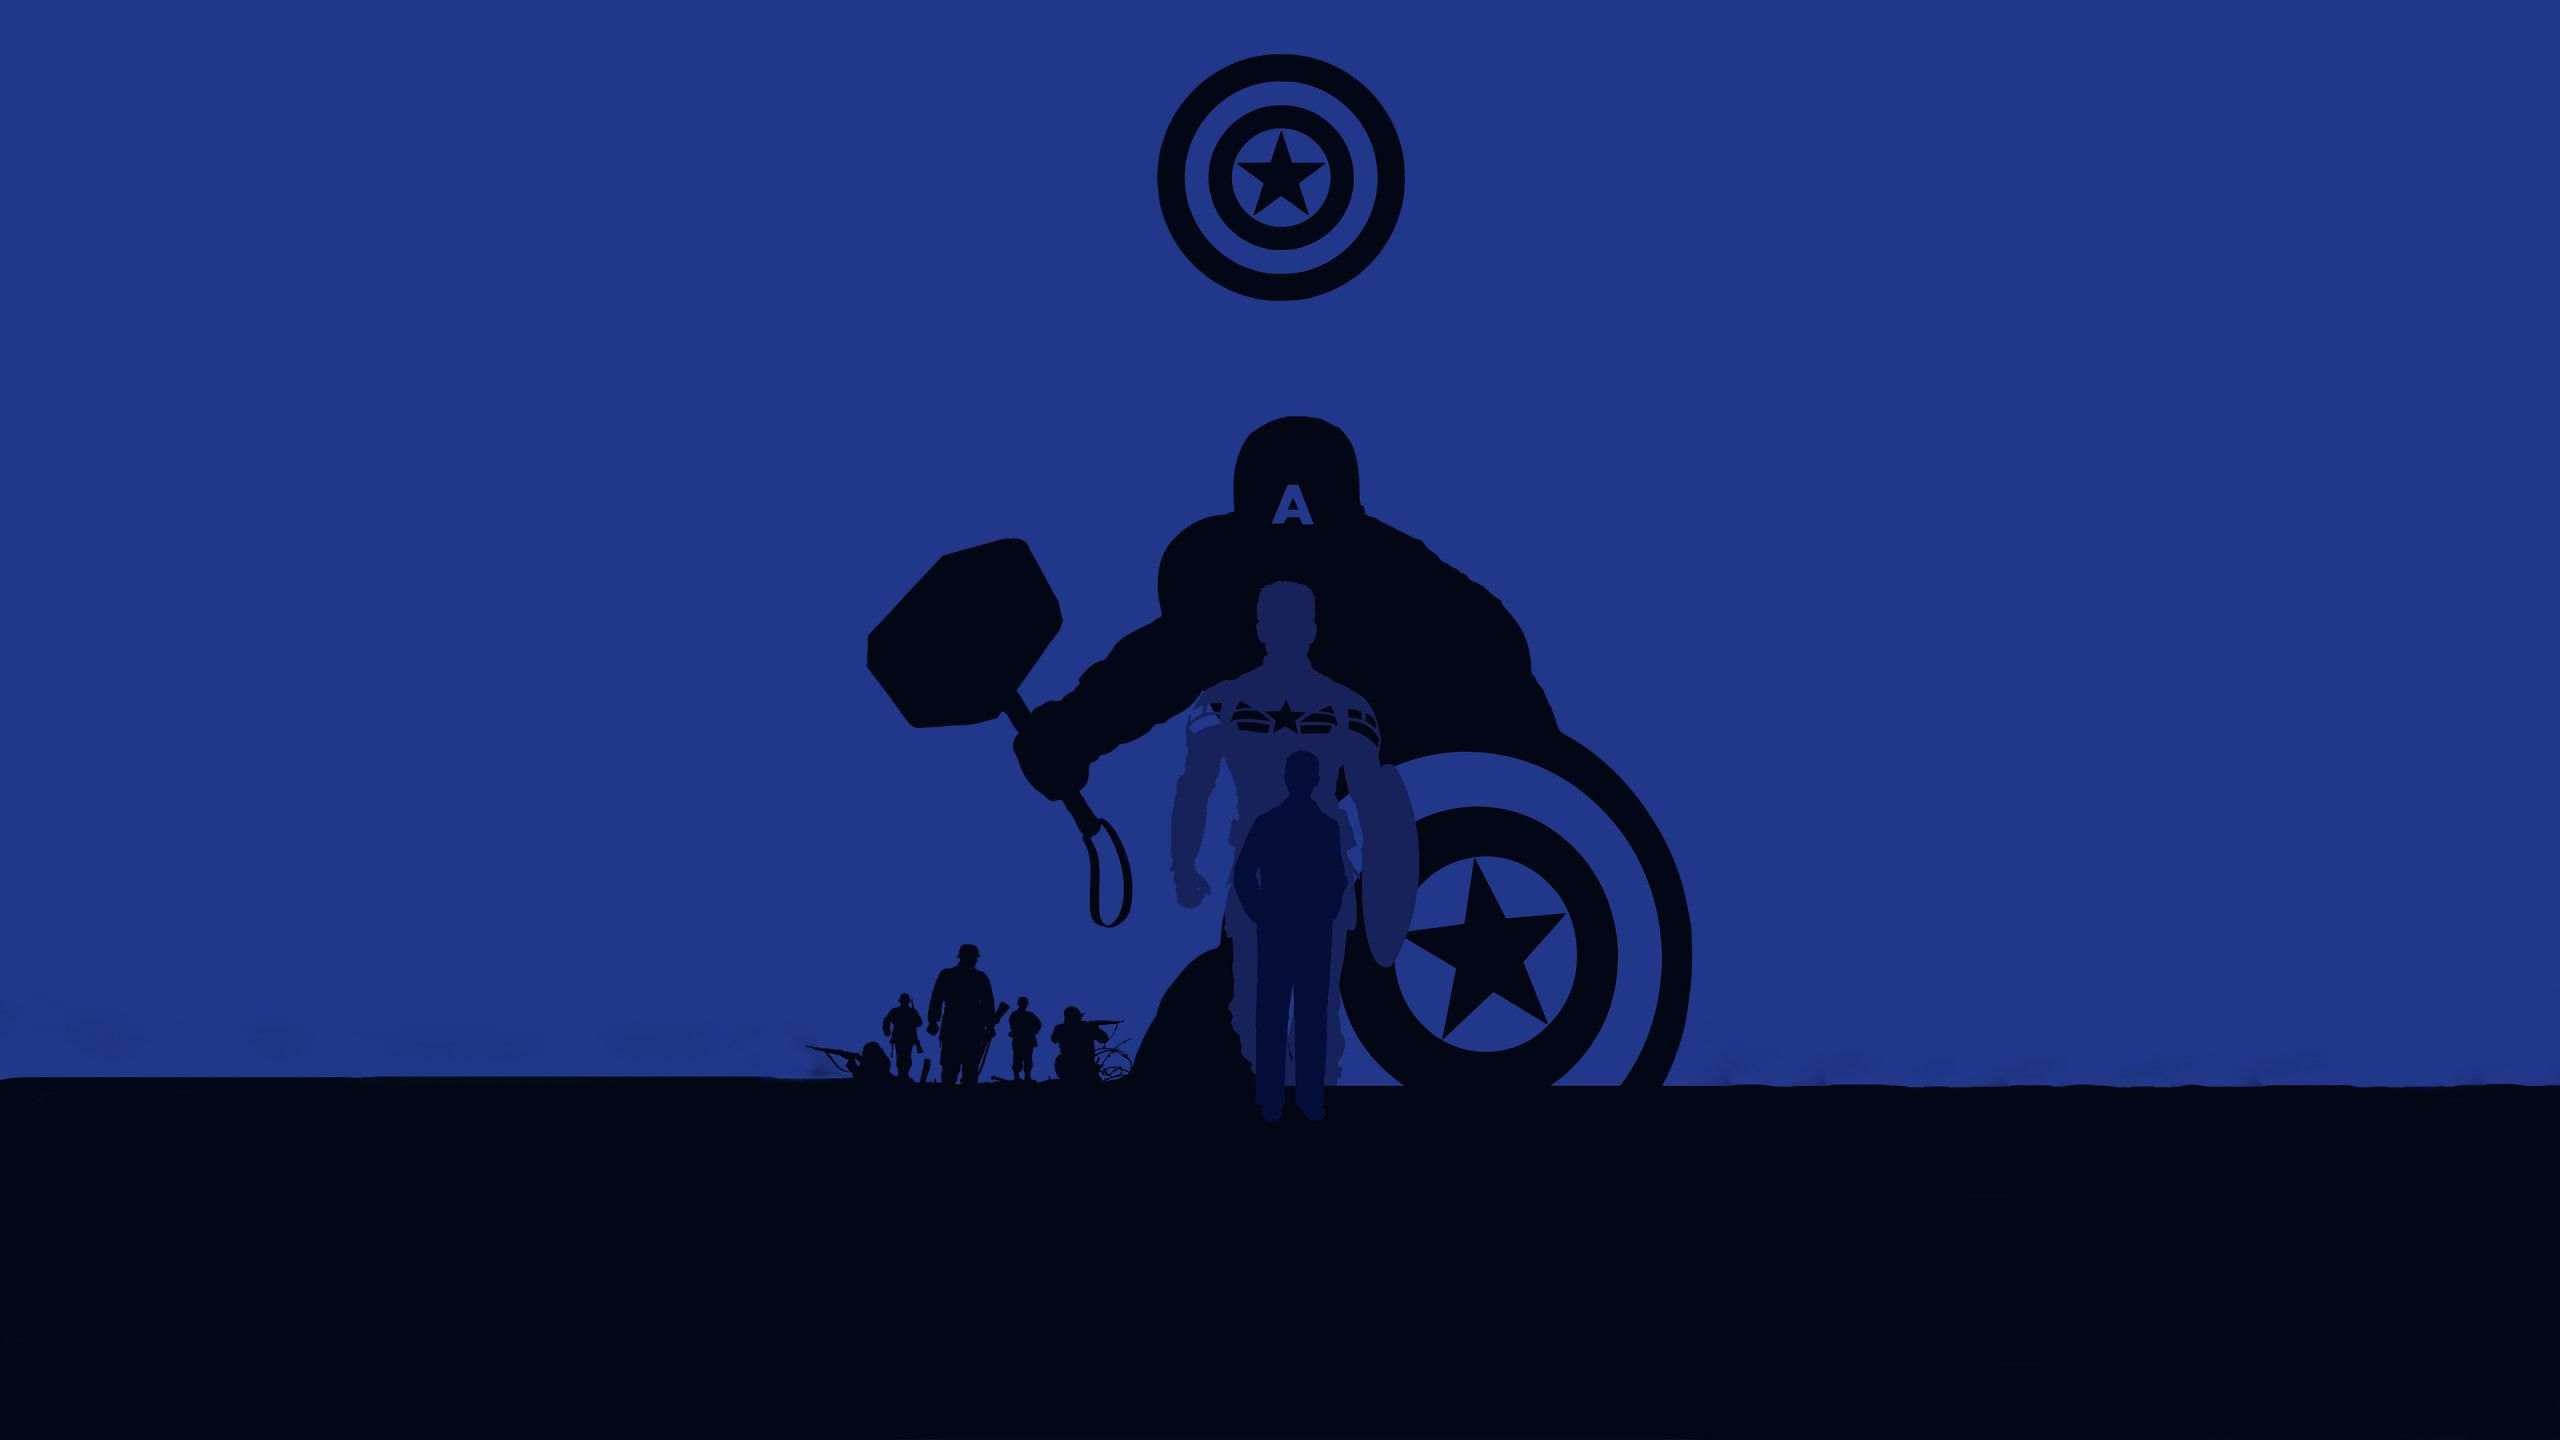 Captain America Avengers Endgame 4k Minimalism 1440P